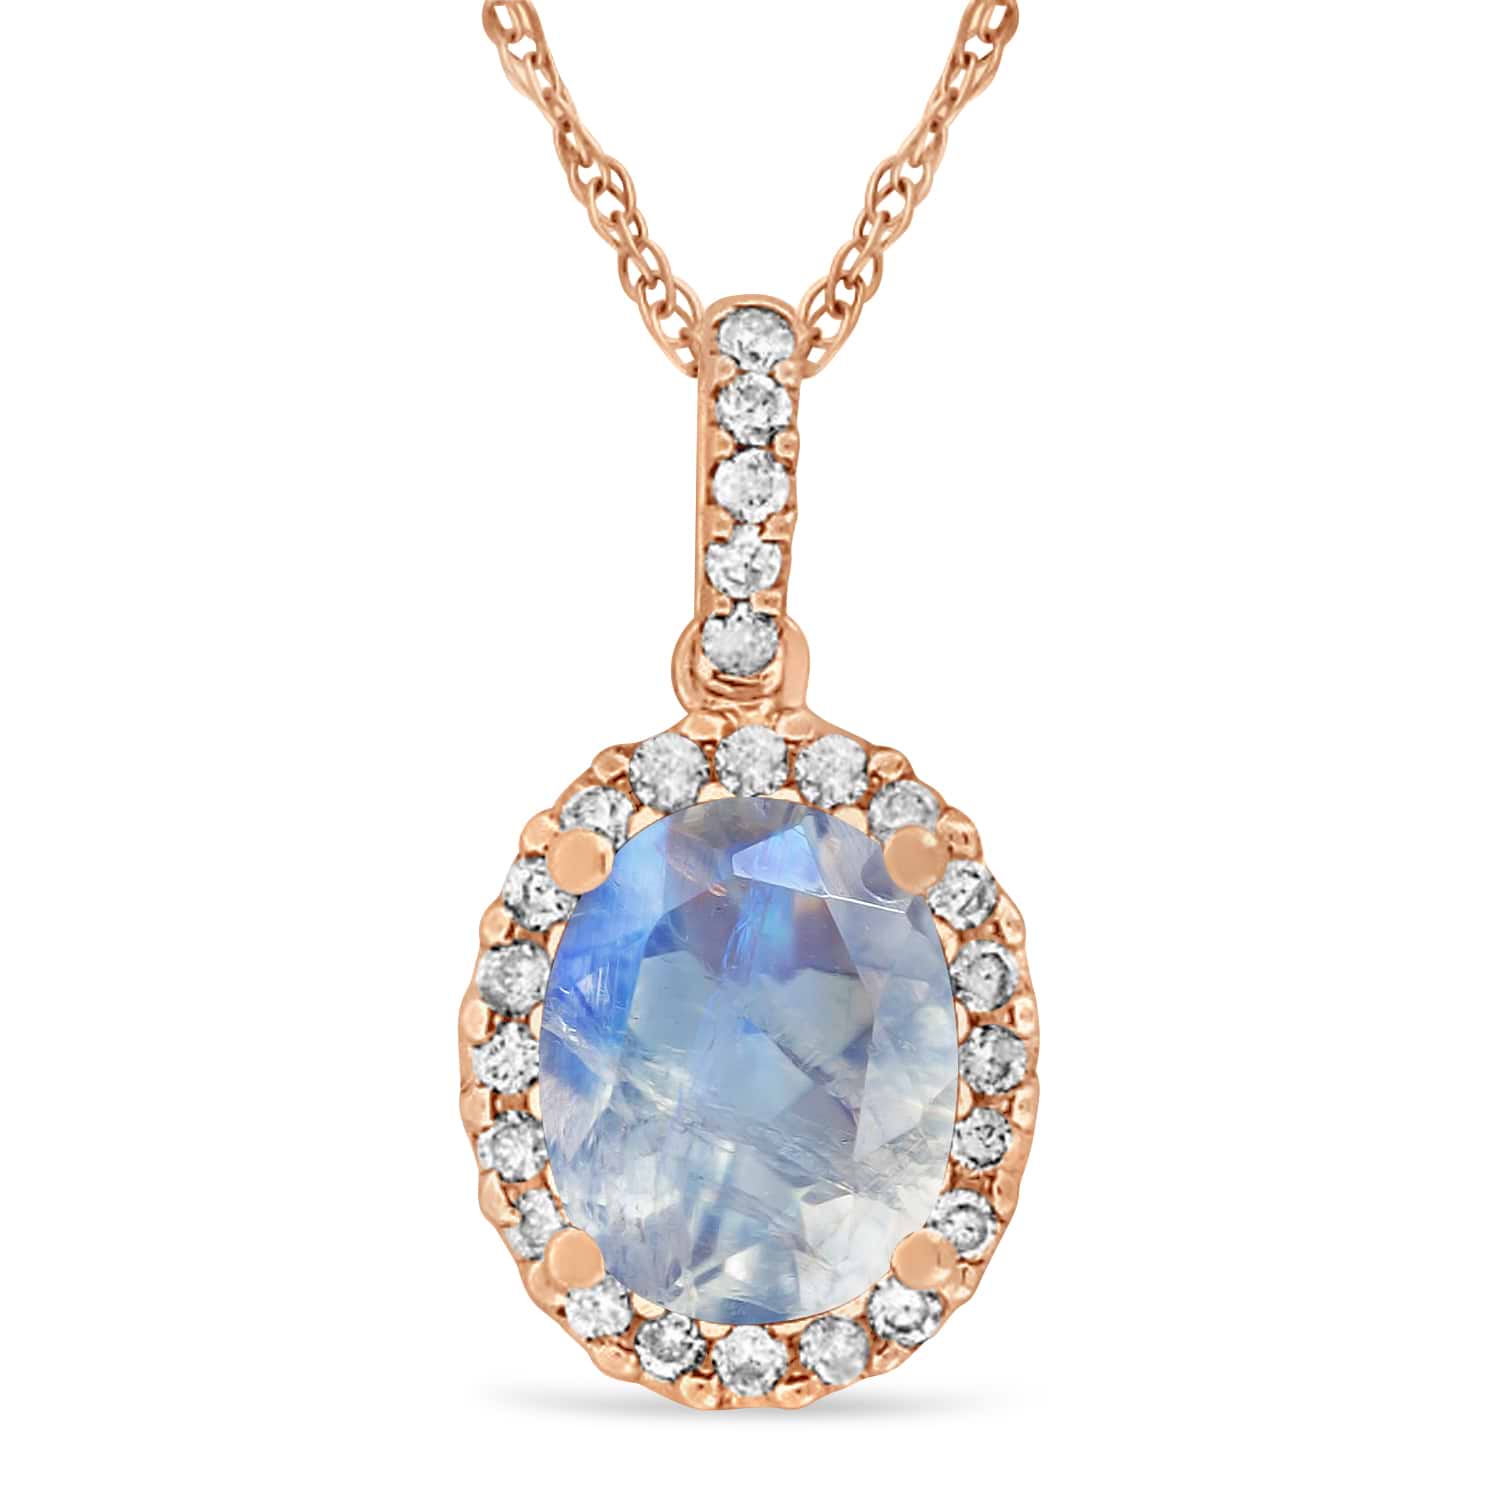 Moonstone & Halo Diamond Pendant Necklace in 14k Rose Gold 2.14ct